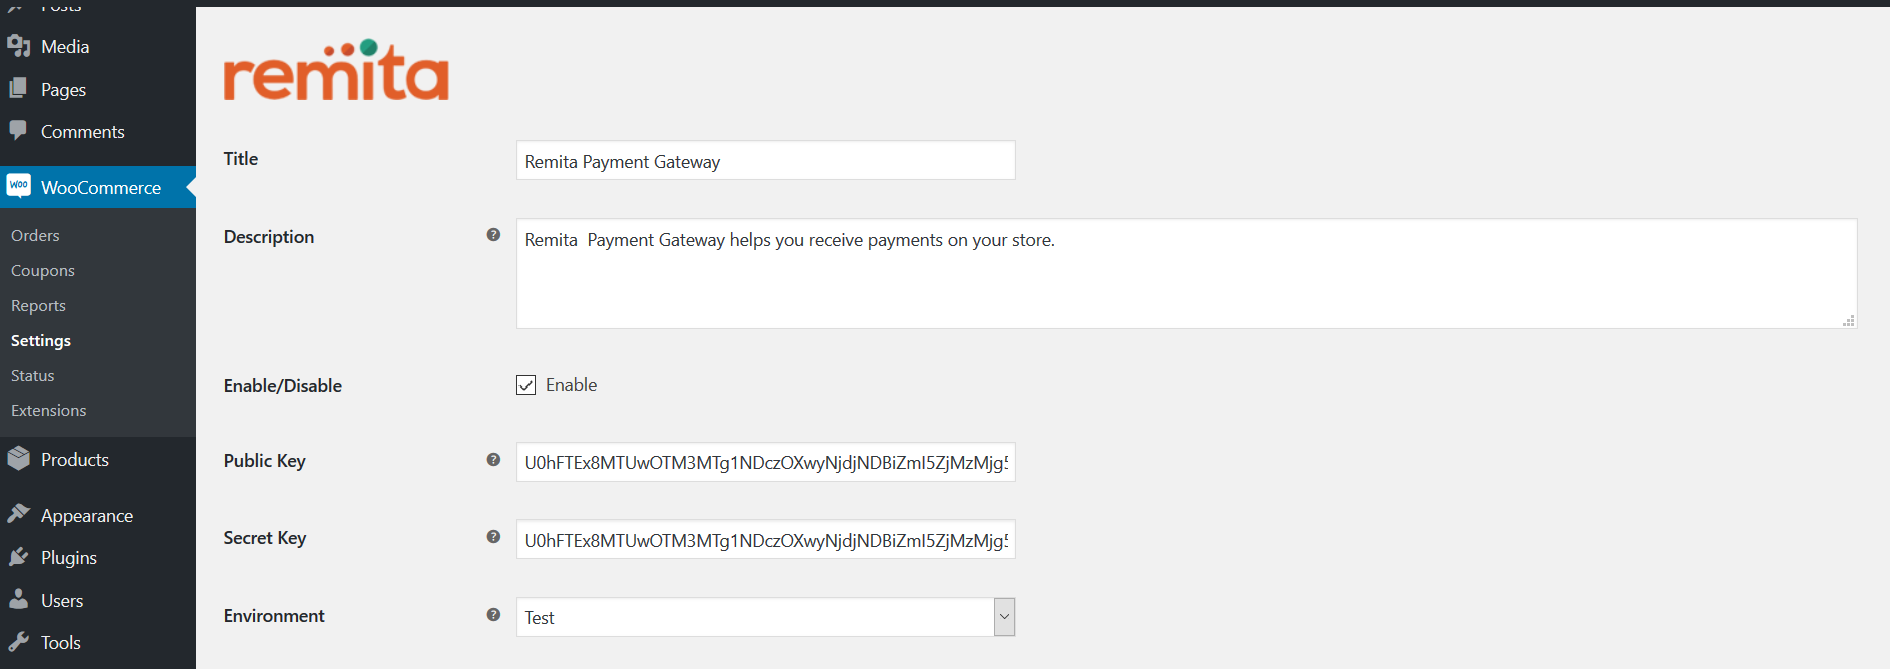 Remita Payment Gateway Plugin Page